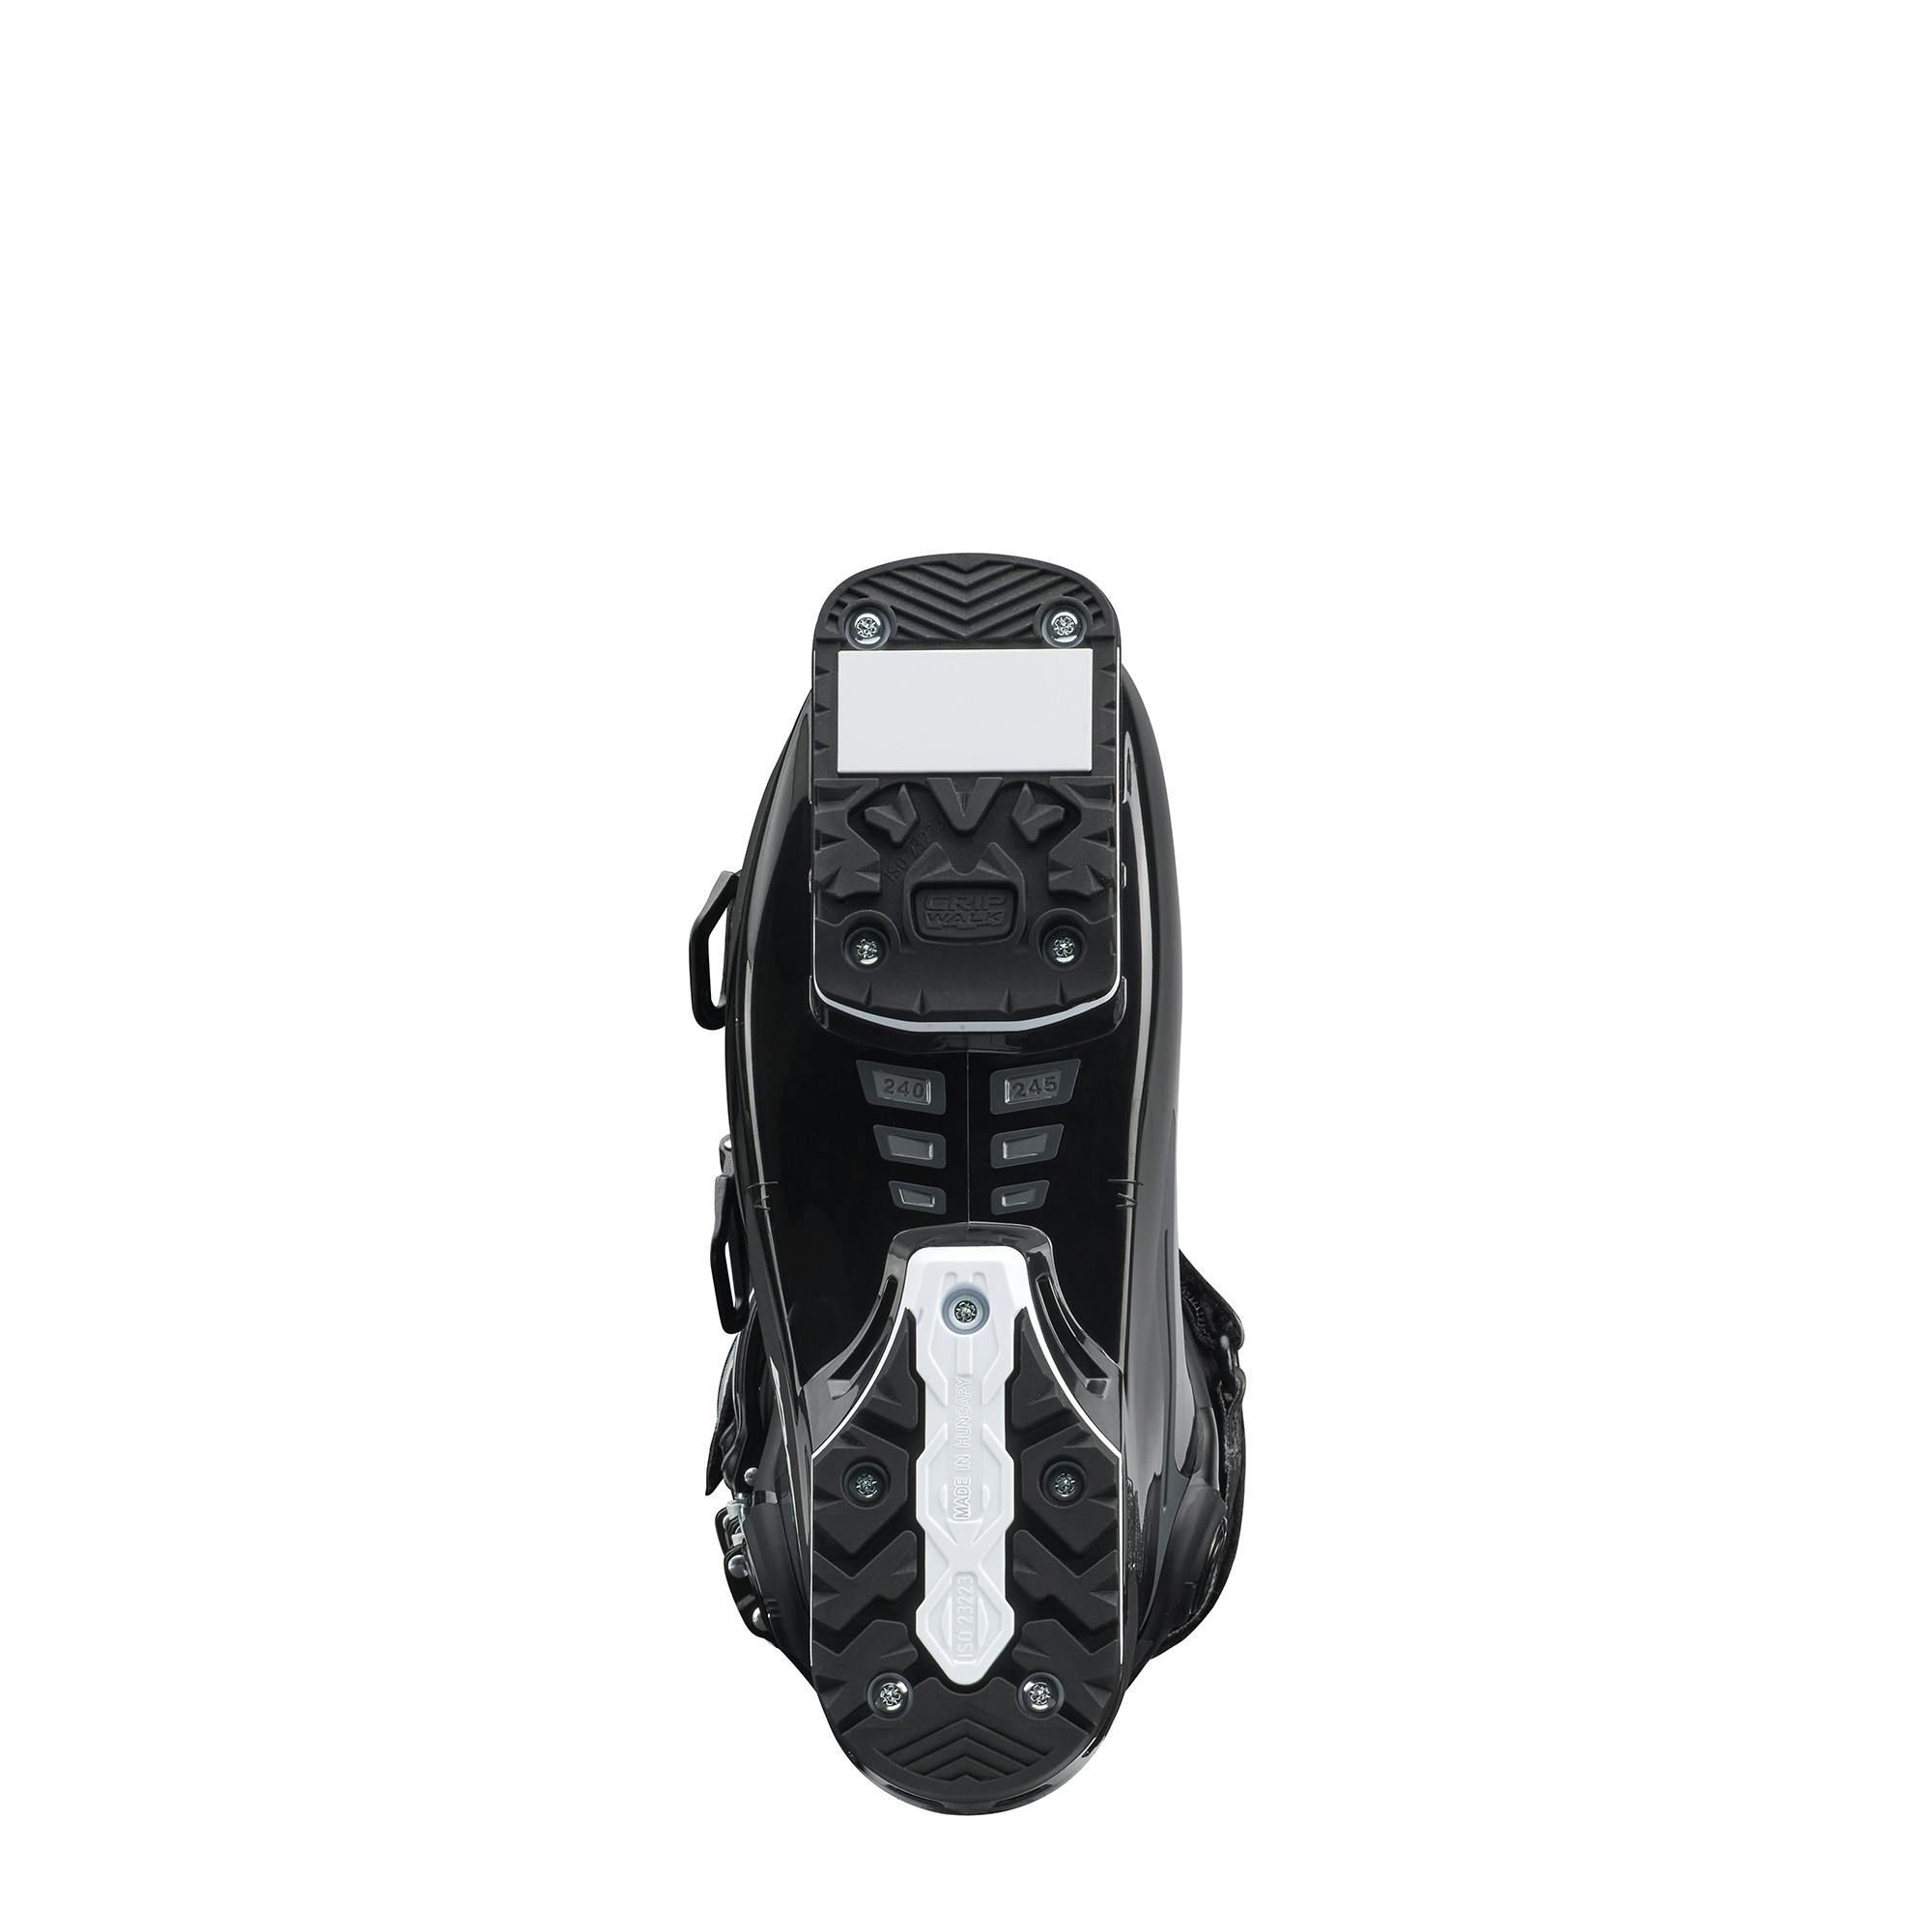 Nordica Speedmachine 3 85 W Ski Boots · Women's · 2024